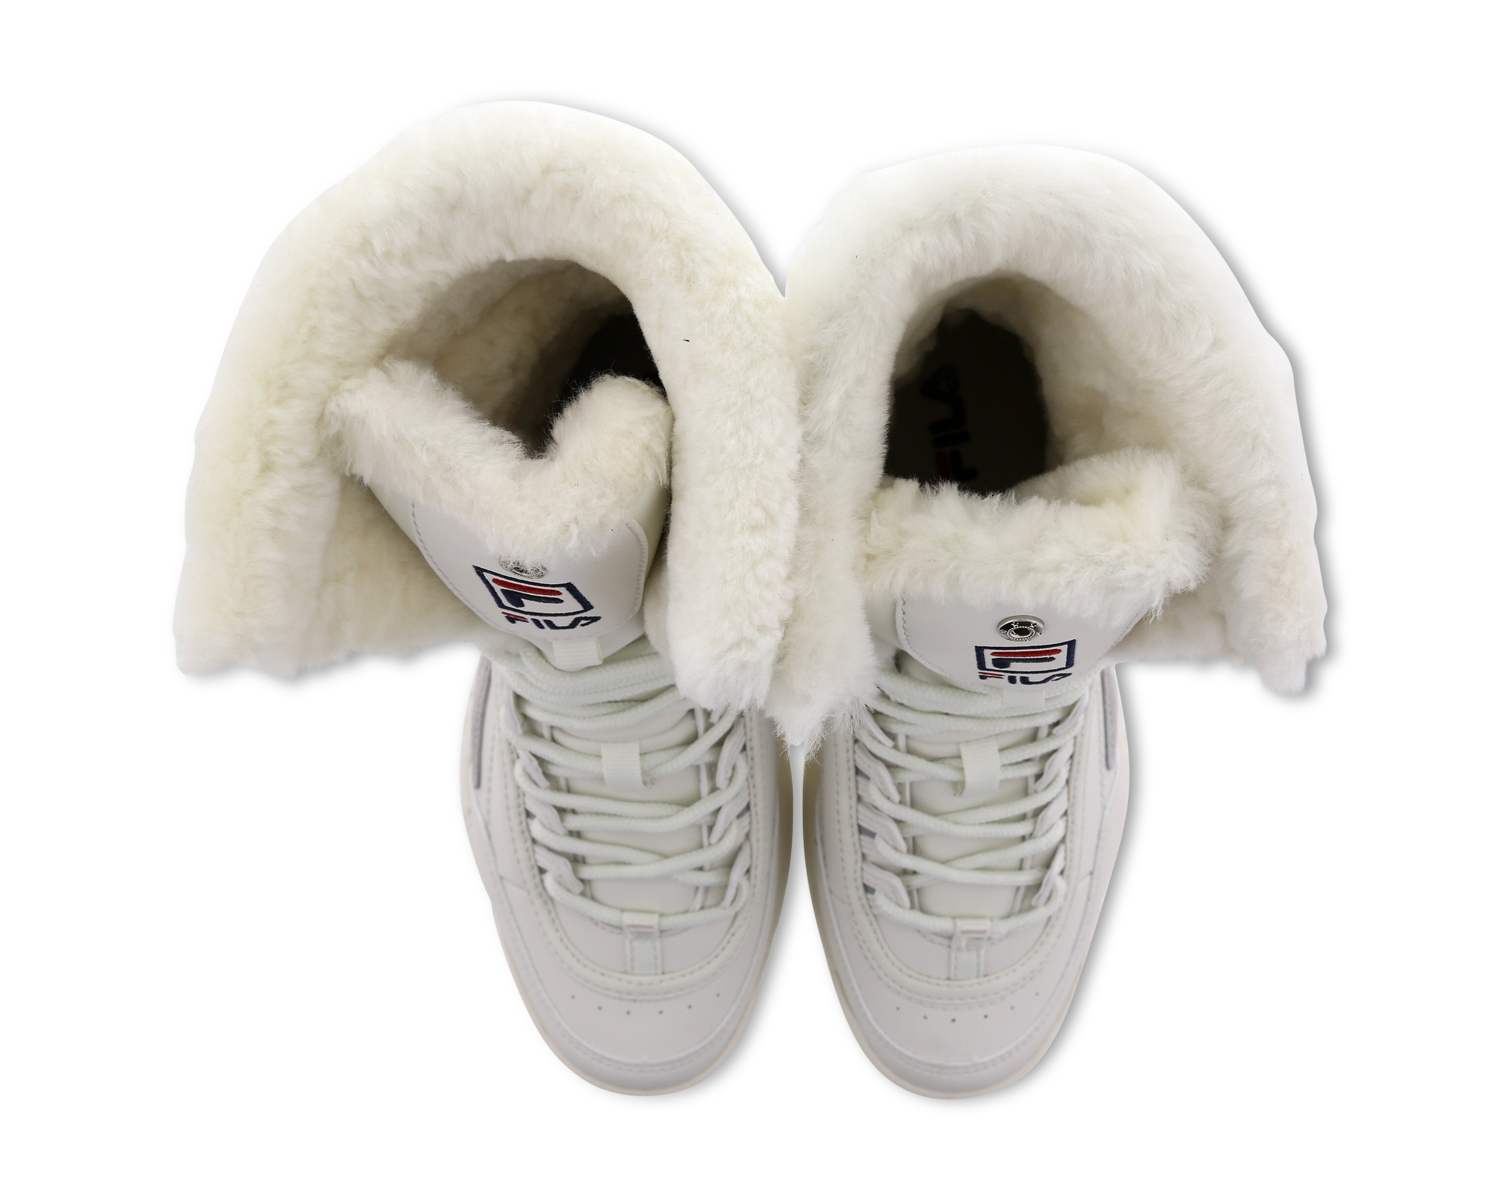 white fila fur boots